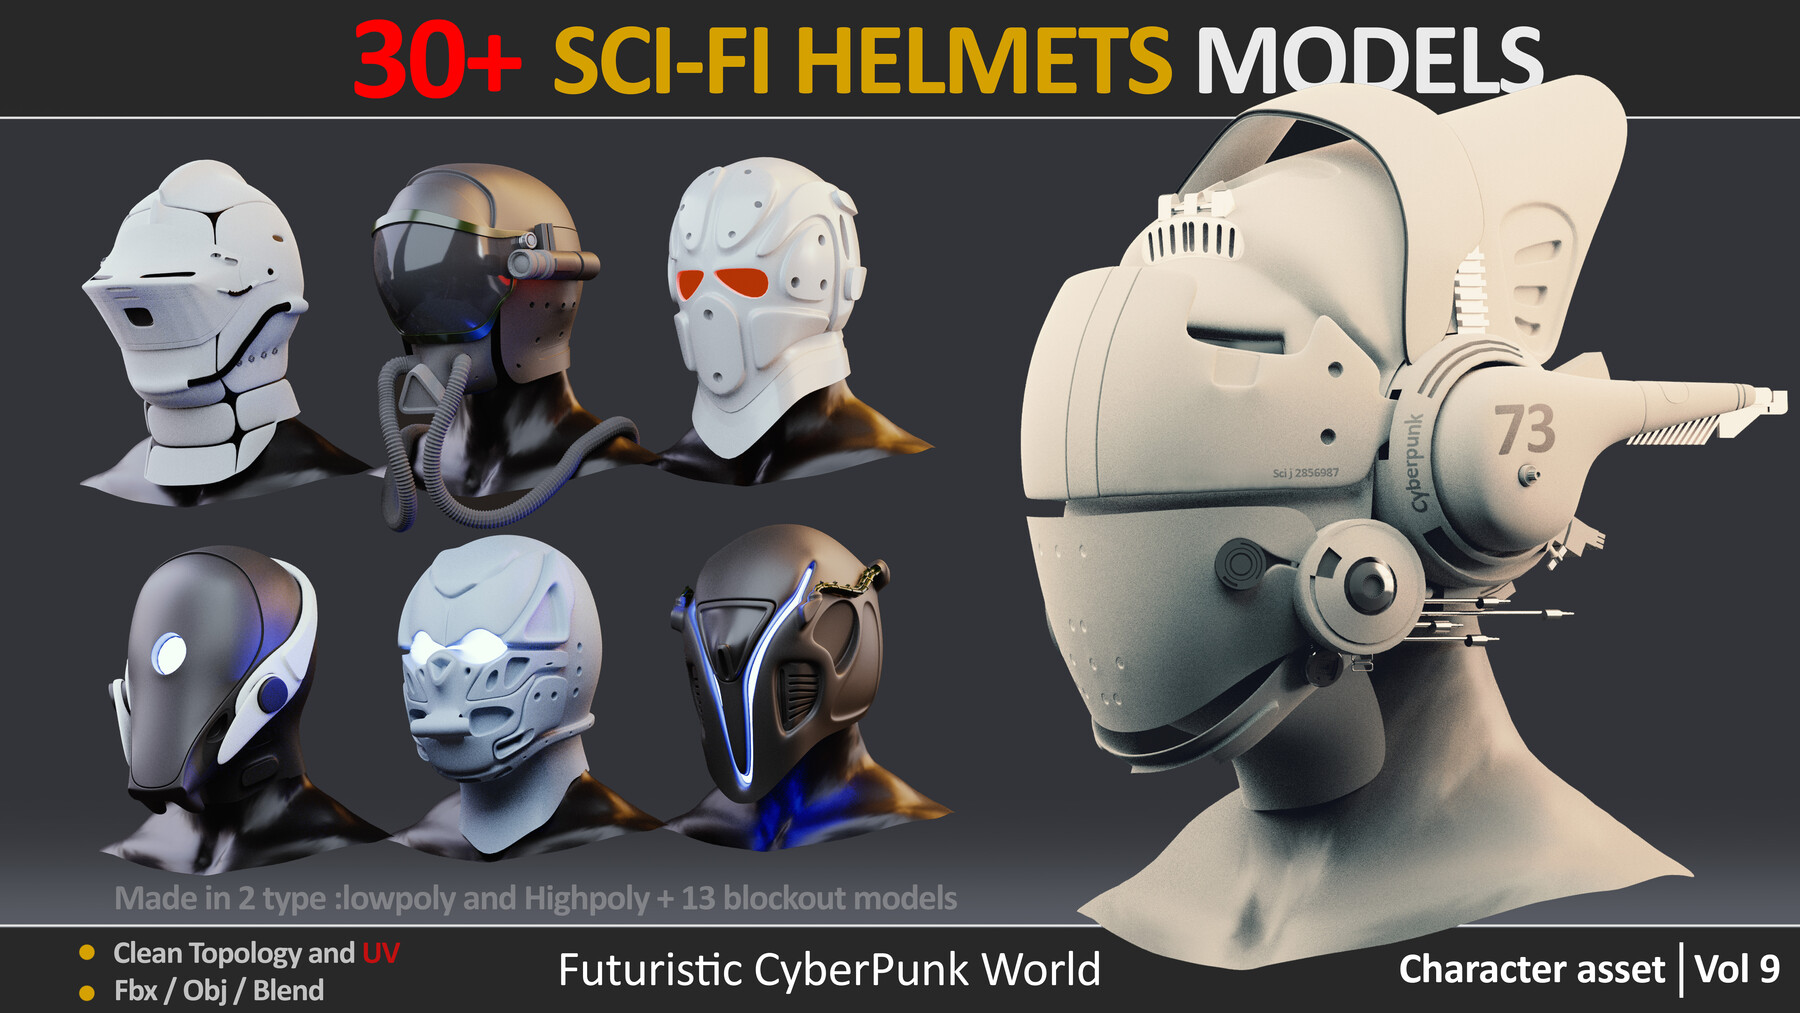 futuristic helmets